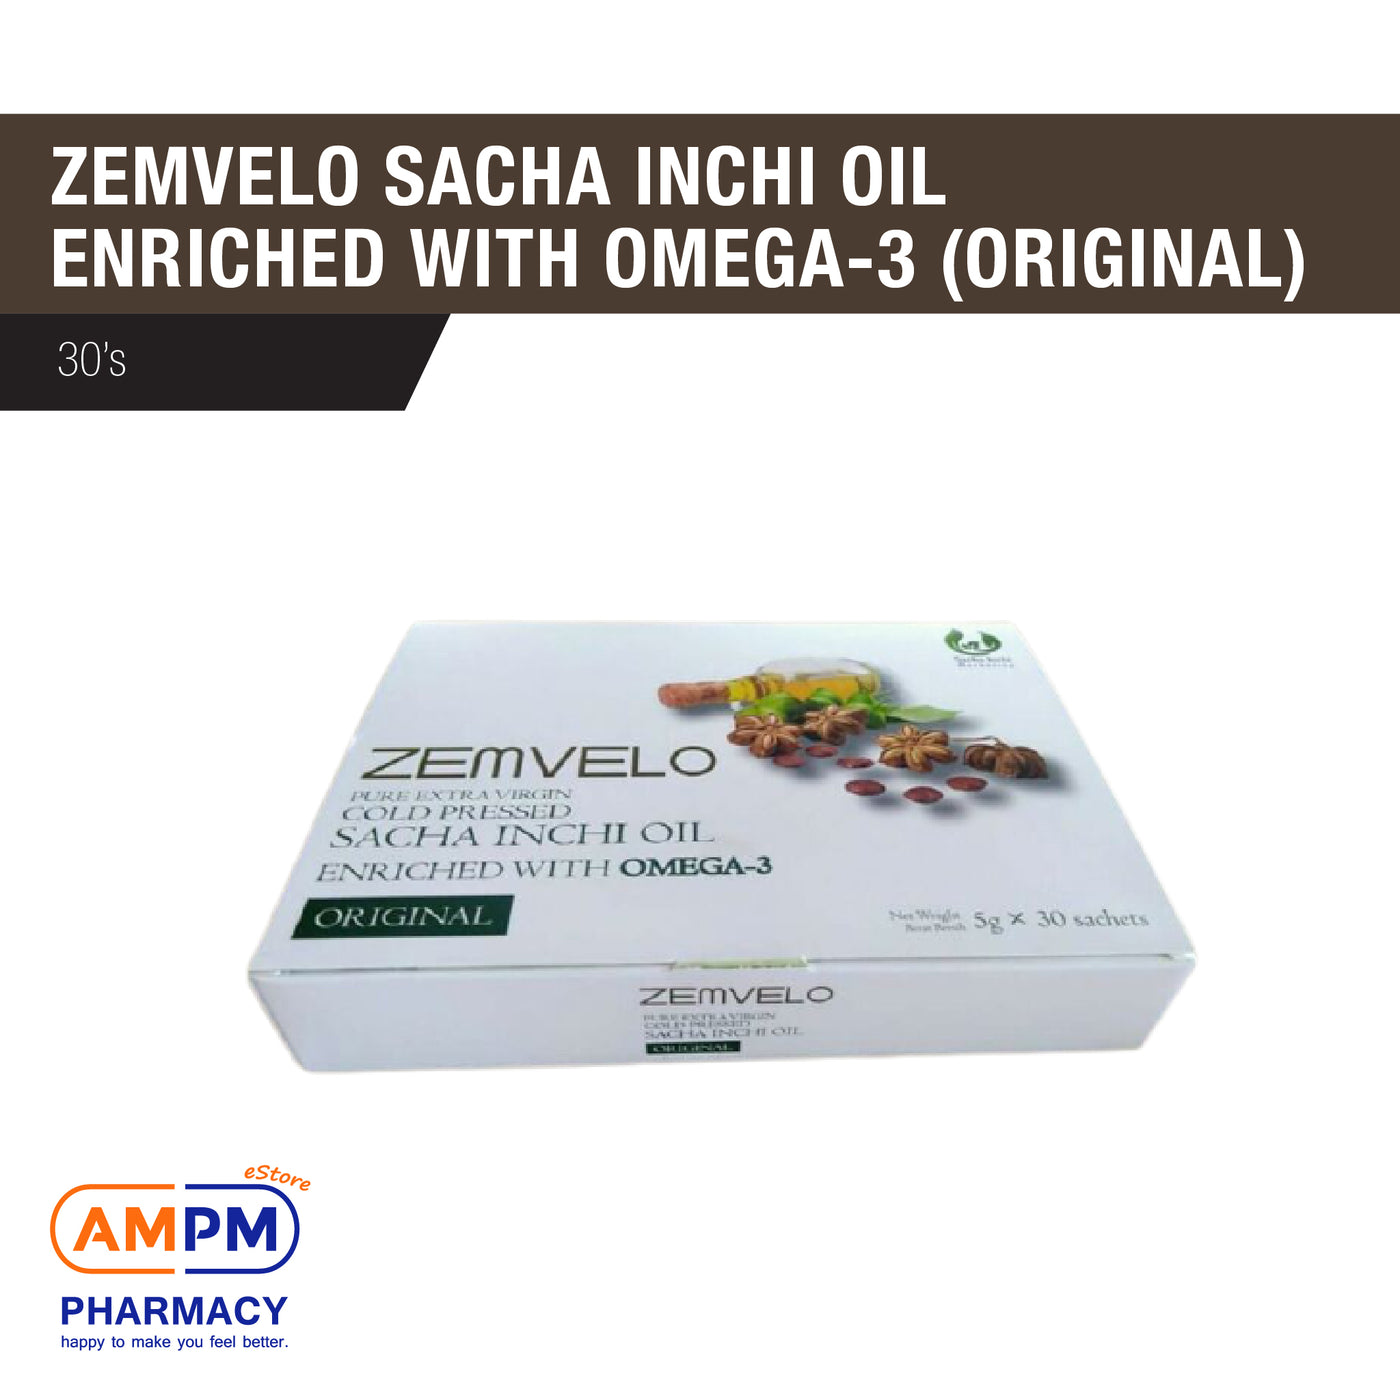 ZEMVELO SACHA INCHI OIL ENRICHED WITH OMEGA-3 (ORIGINAL)